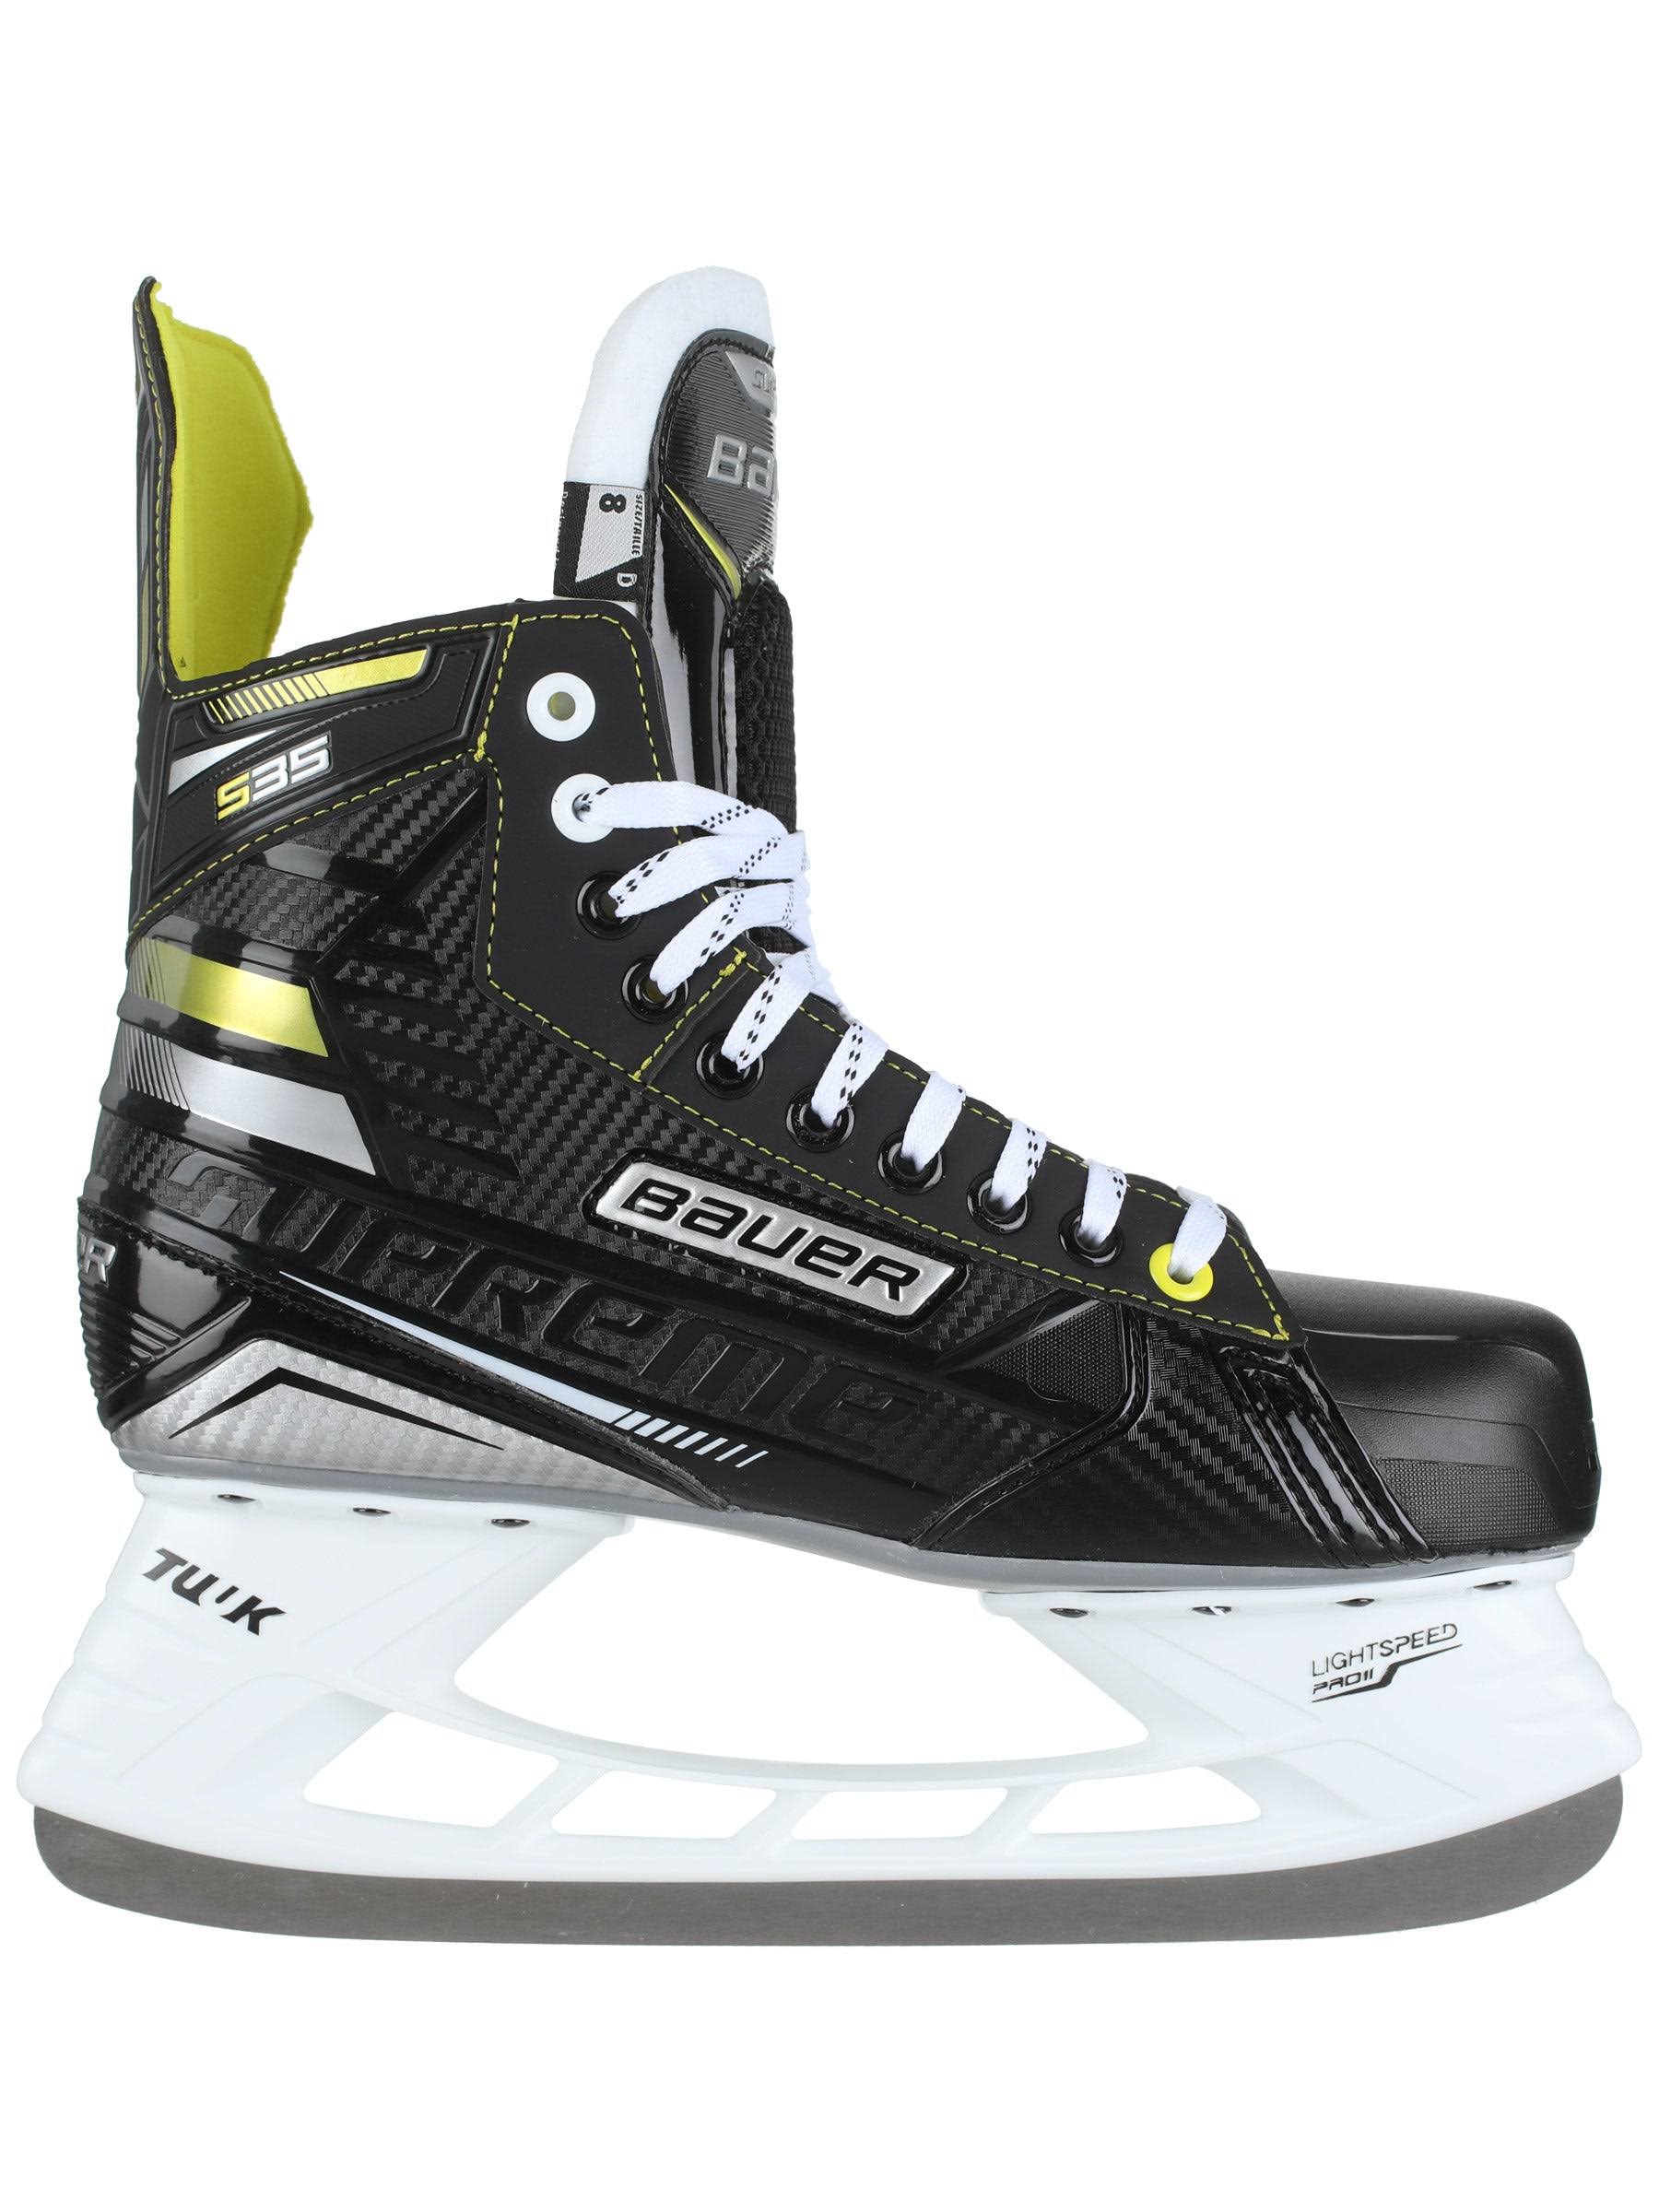 Bauer Supreme S35 Ice Hockey Skates - Senior - 9.5 - D